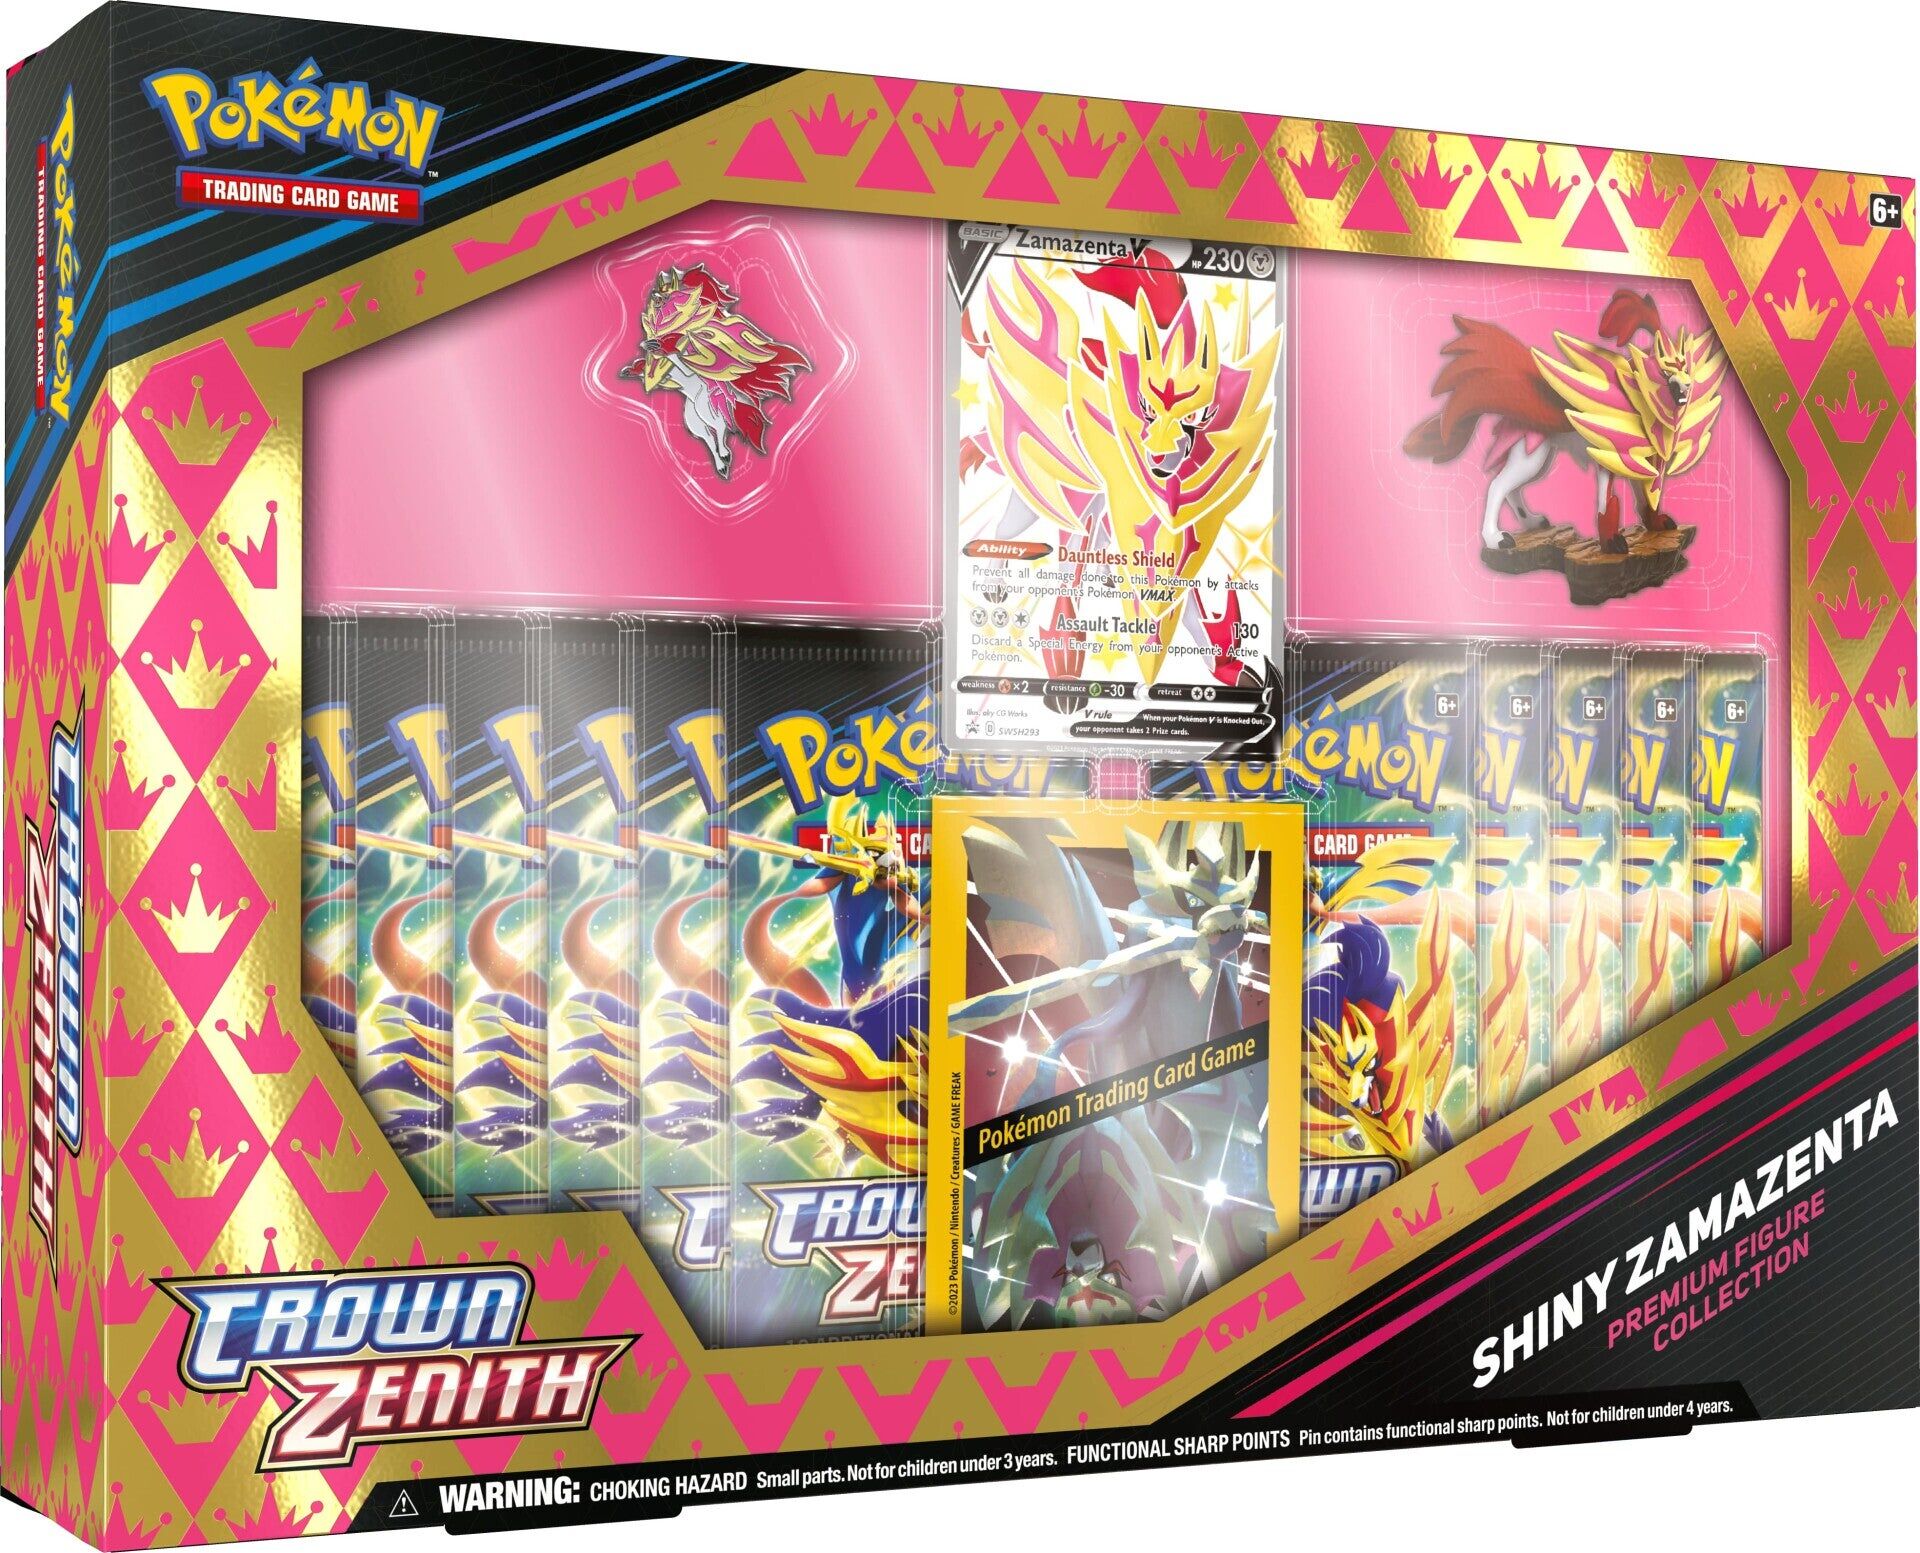 Pokémon Crown Zenith Shiny Zamazenta Premium Figure Collection Box - EN